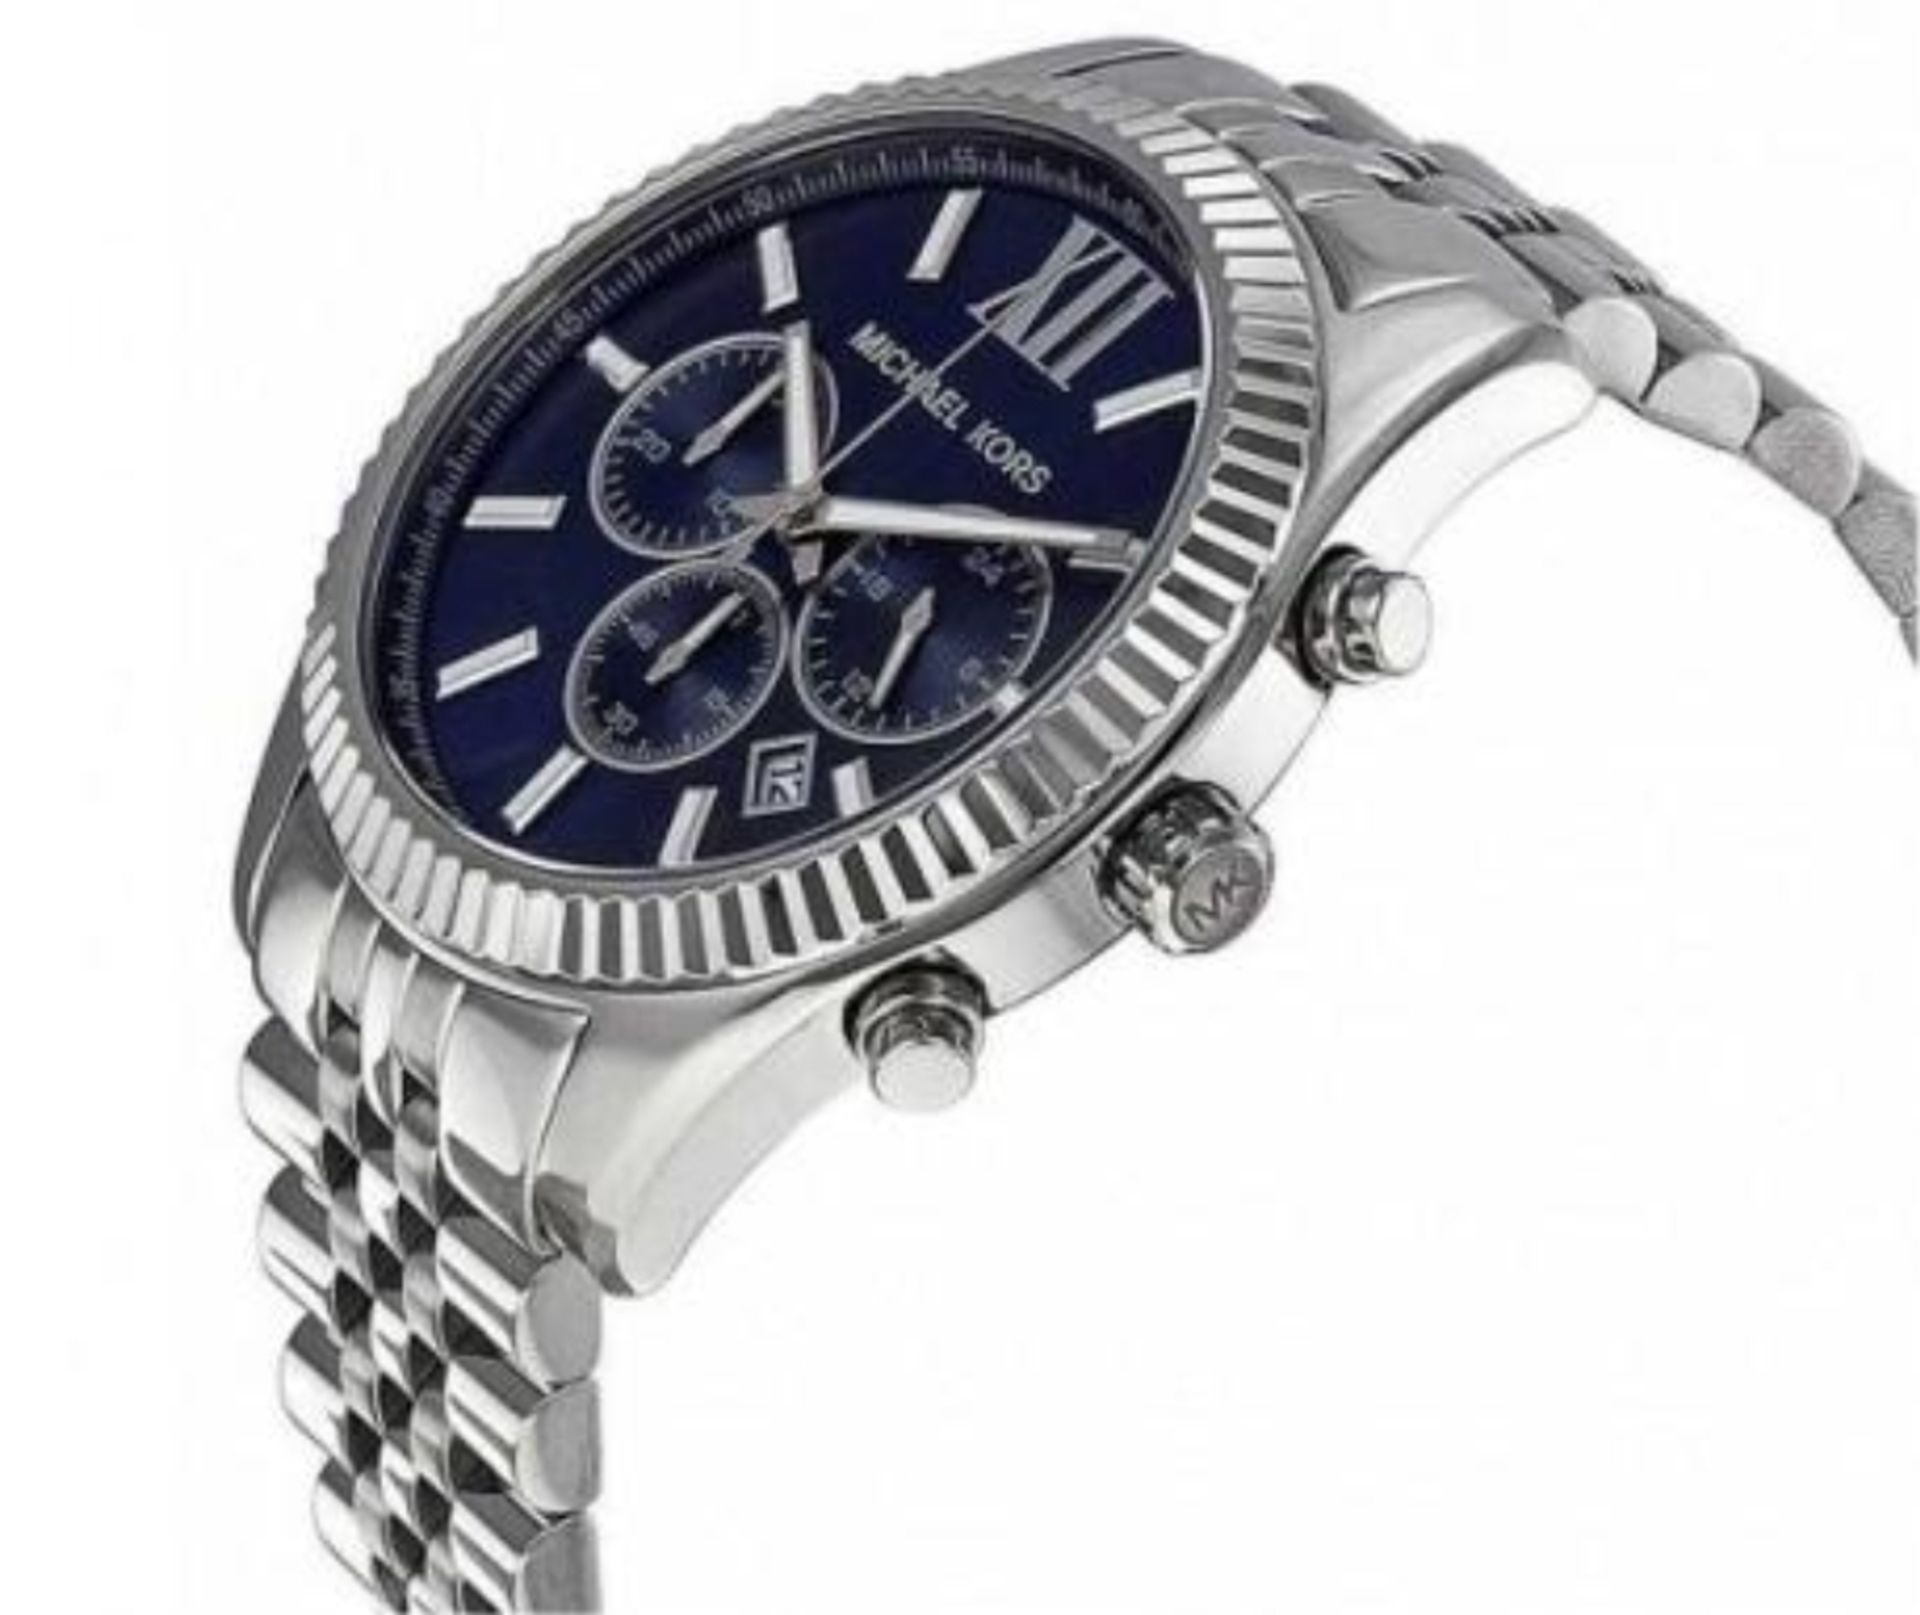 Michael Kors MK8280 Men's Lexington Chronograph Watch - Image 3 of 6